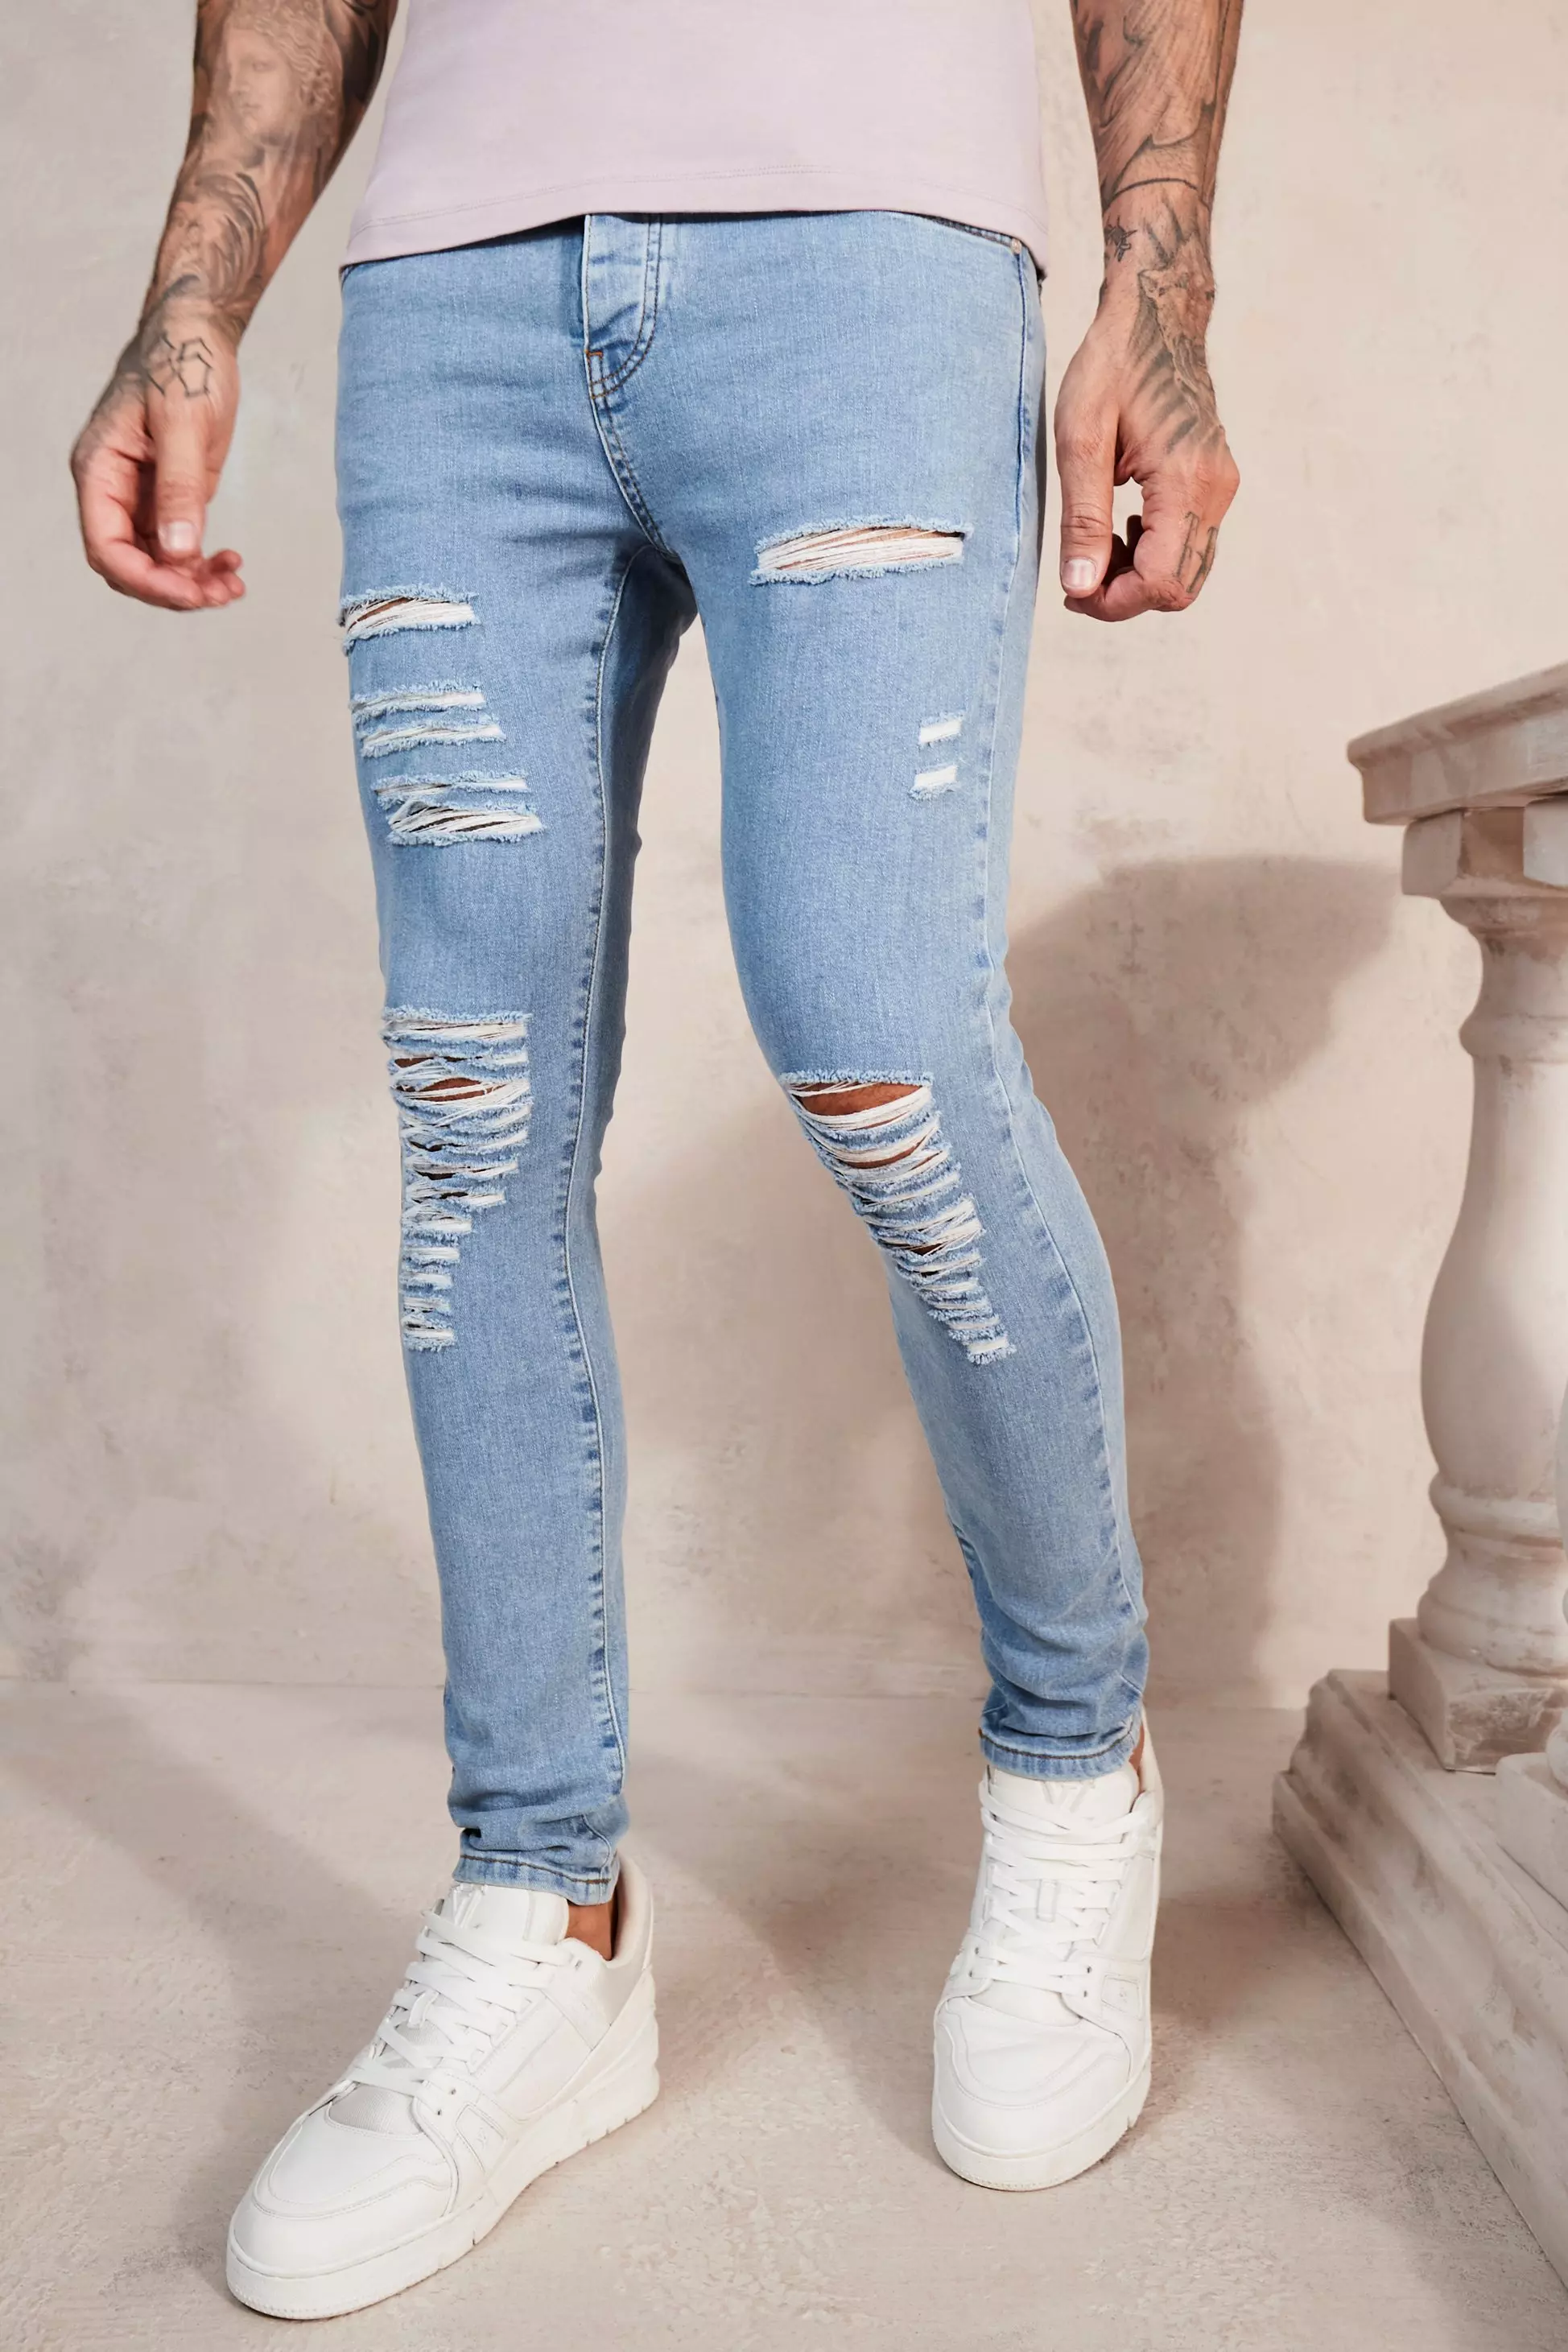 skinny jeans for men cool